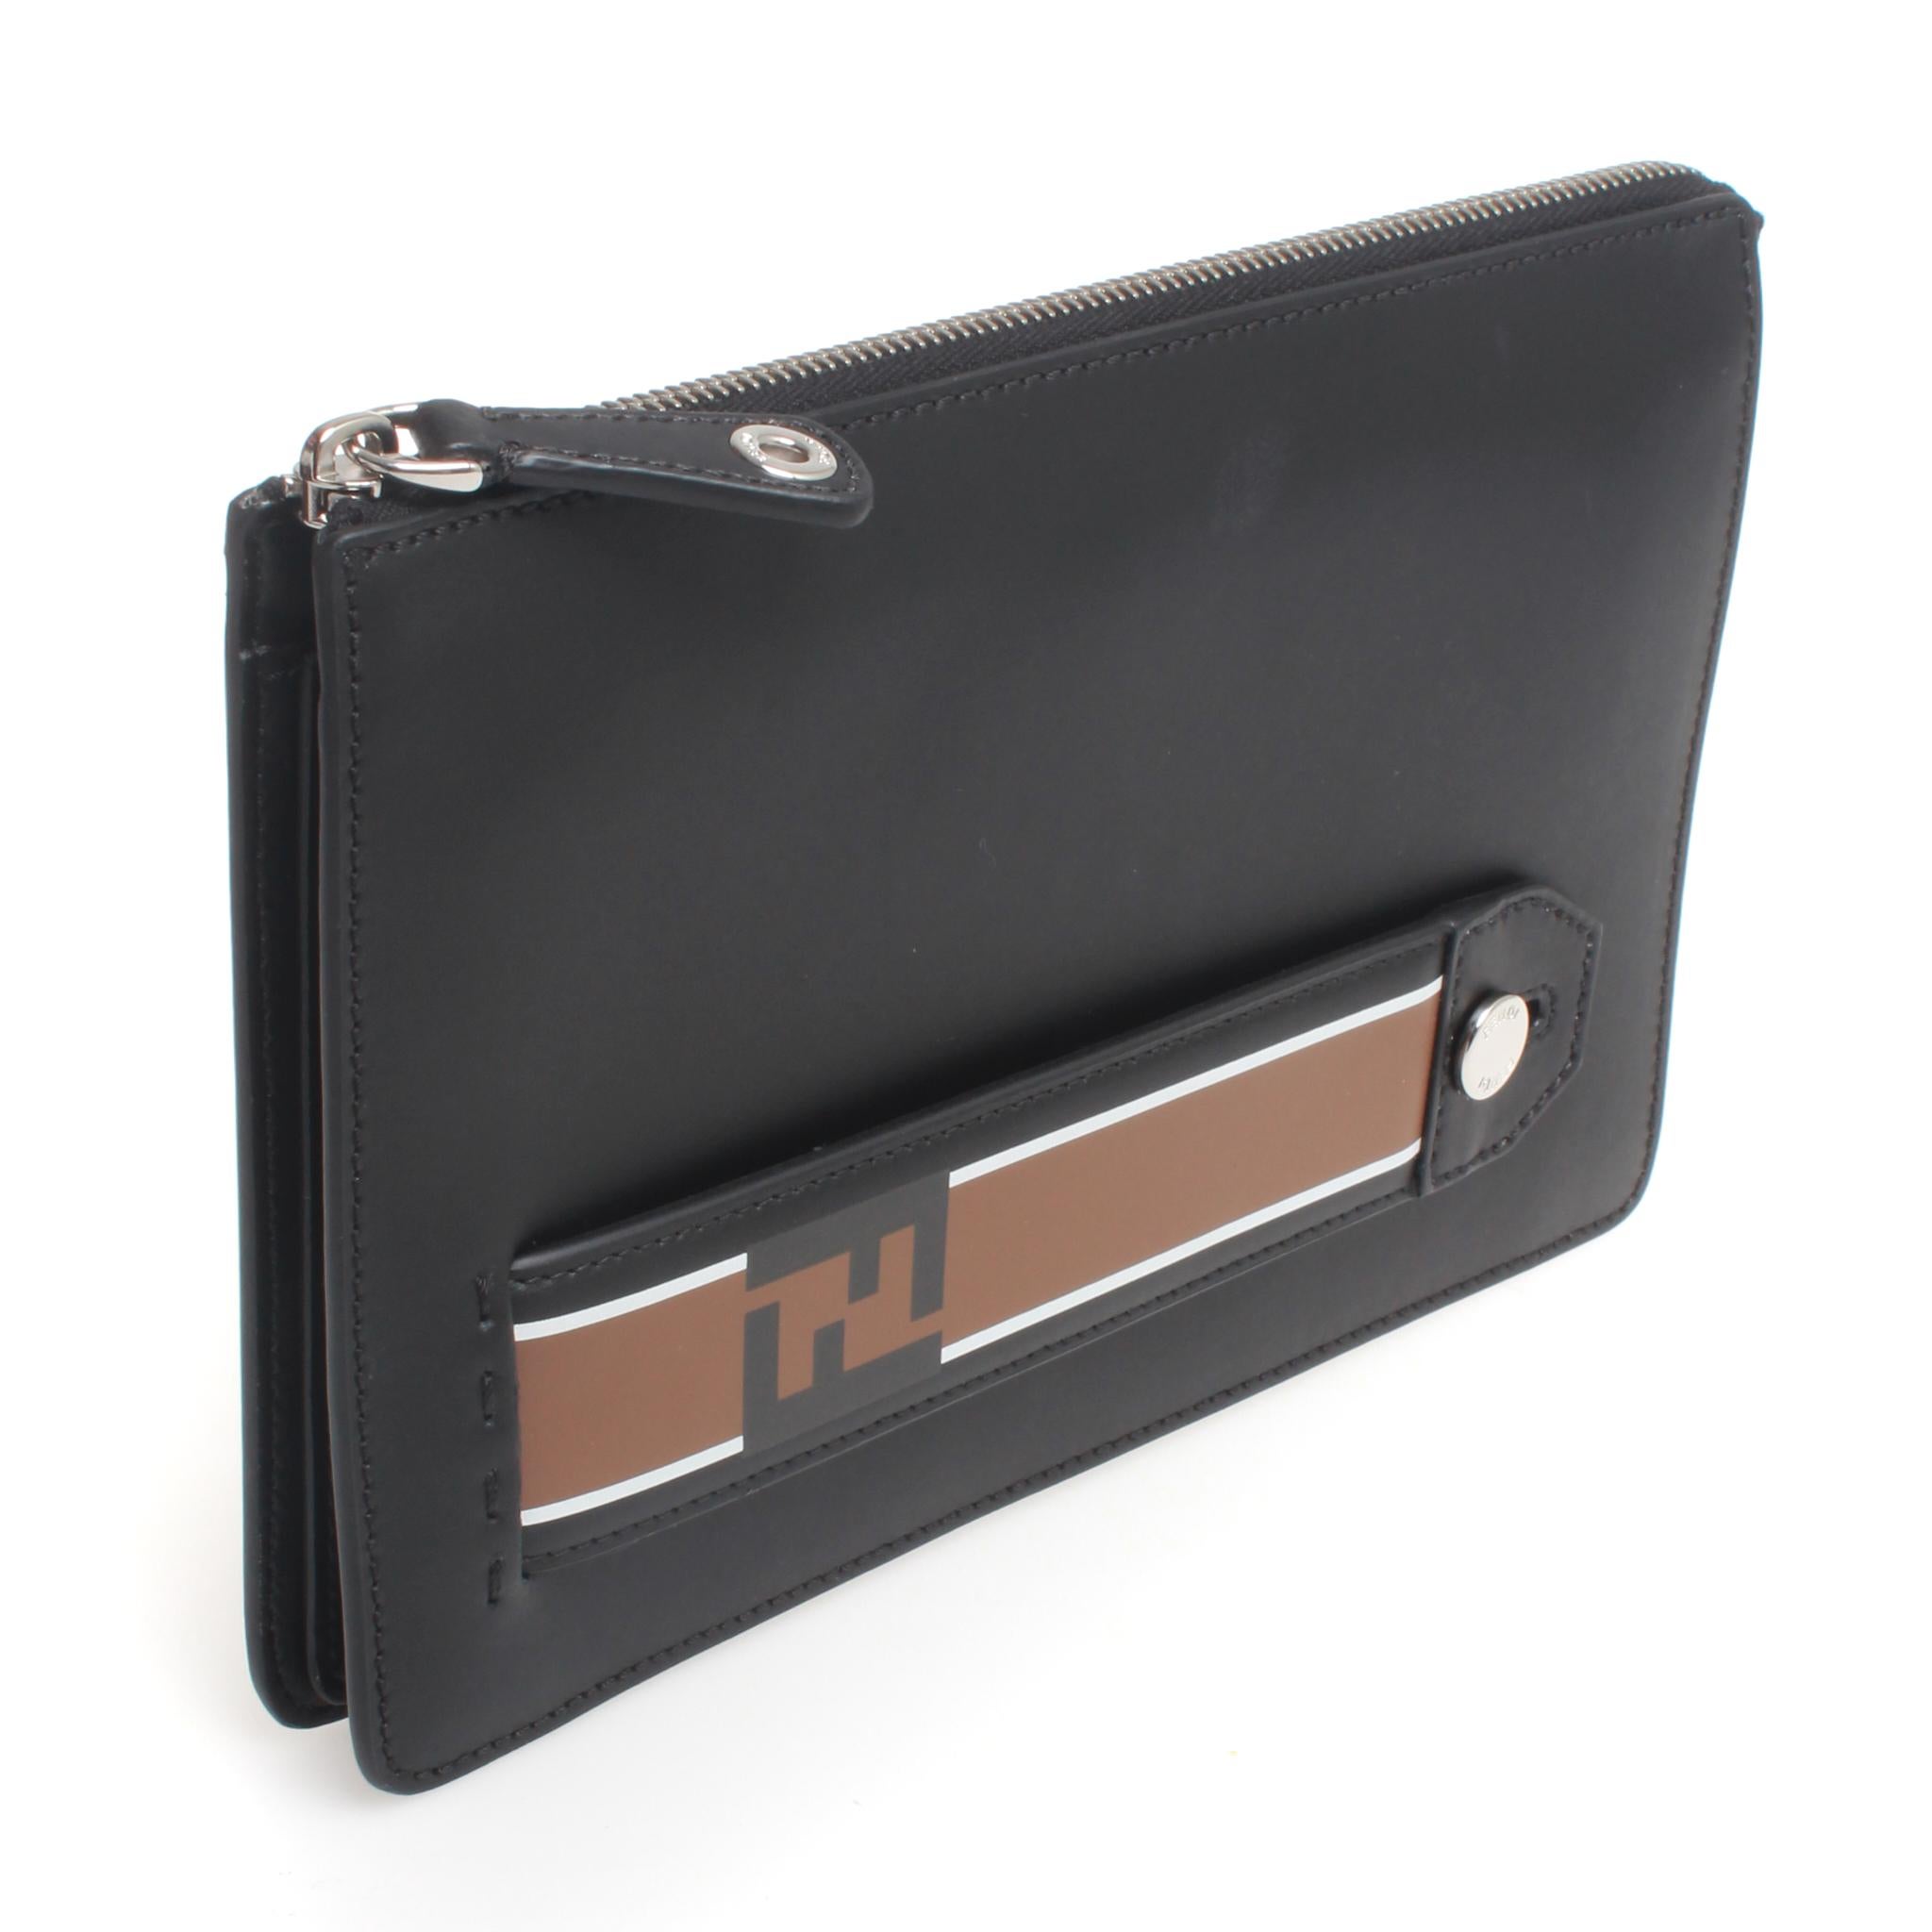 Sleek and minimal FENDI black and brown leather envelope clutch.